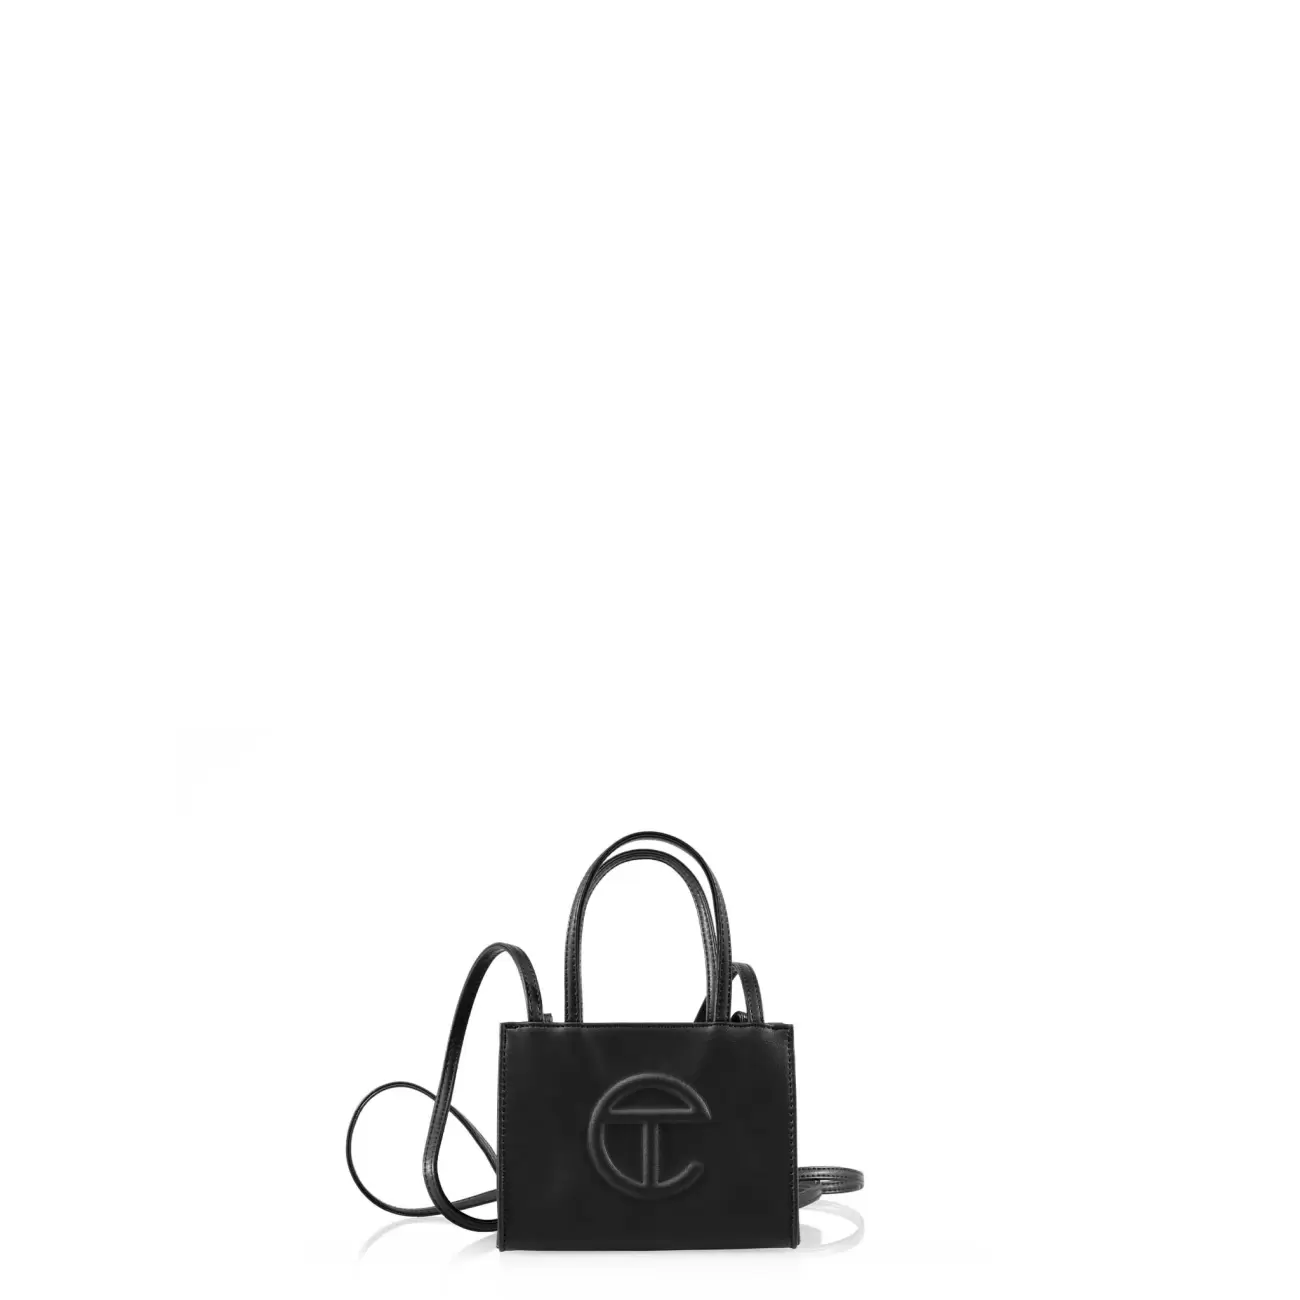 Small Black Shopping Bag